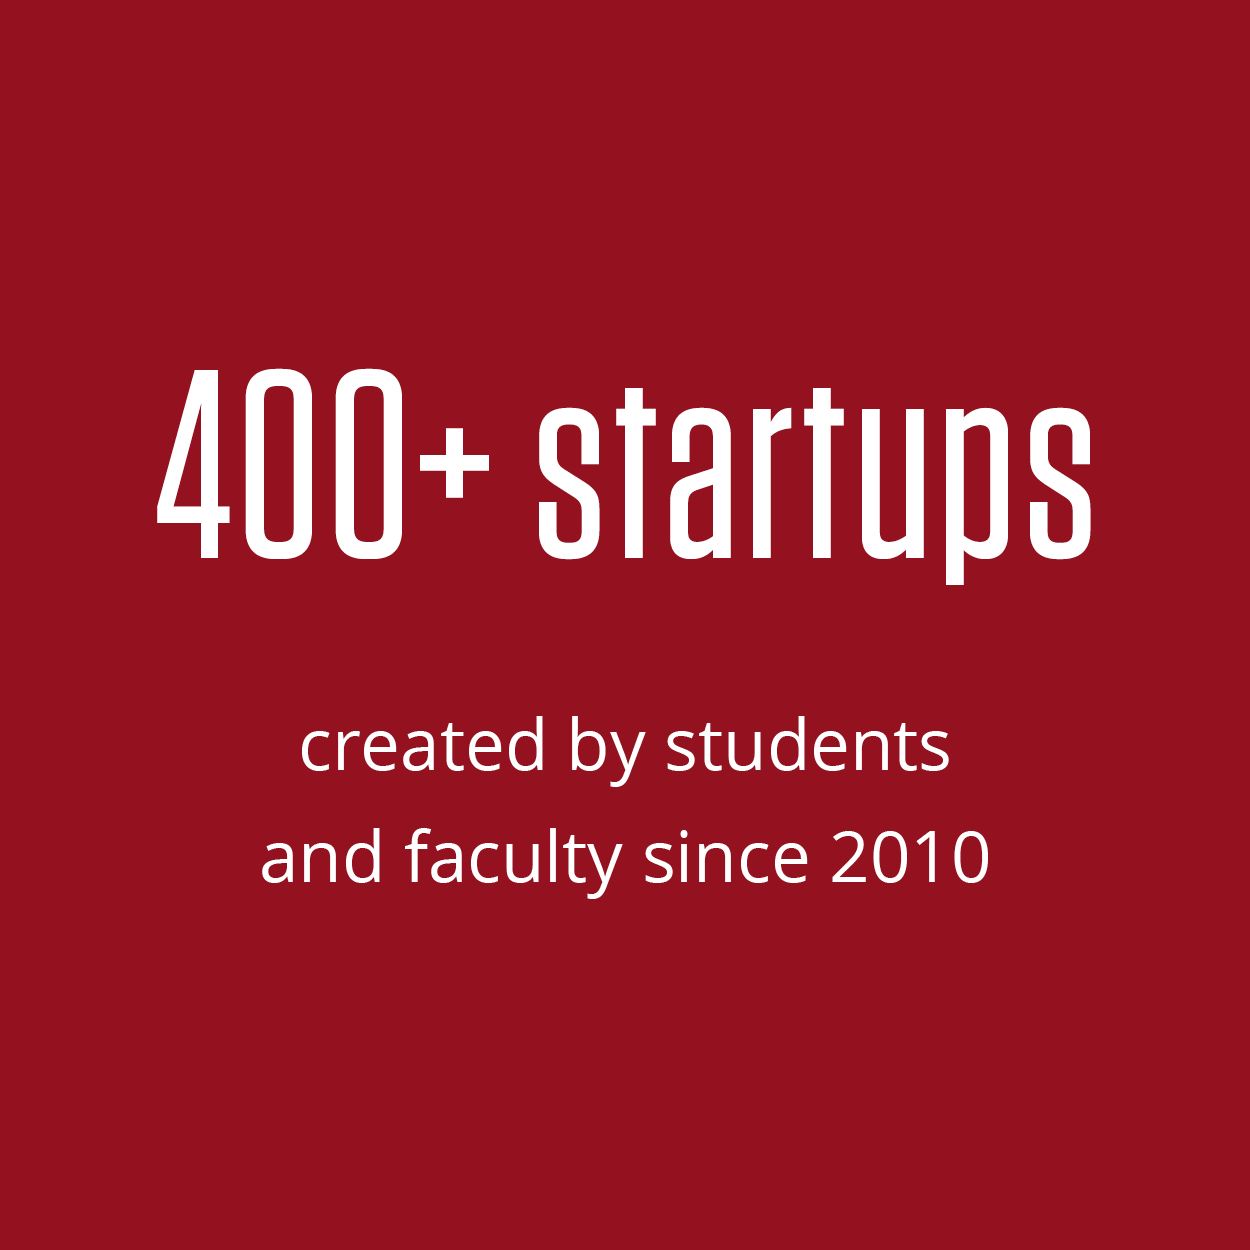 340+ startups